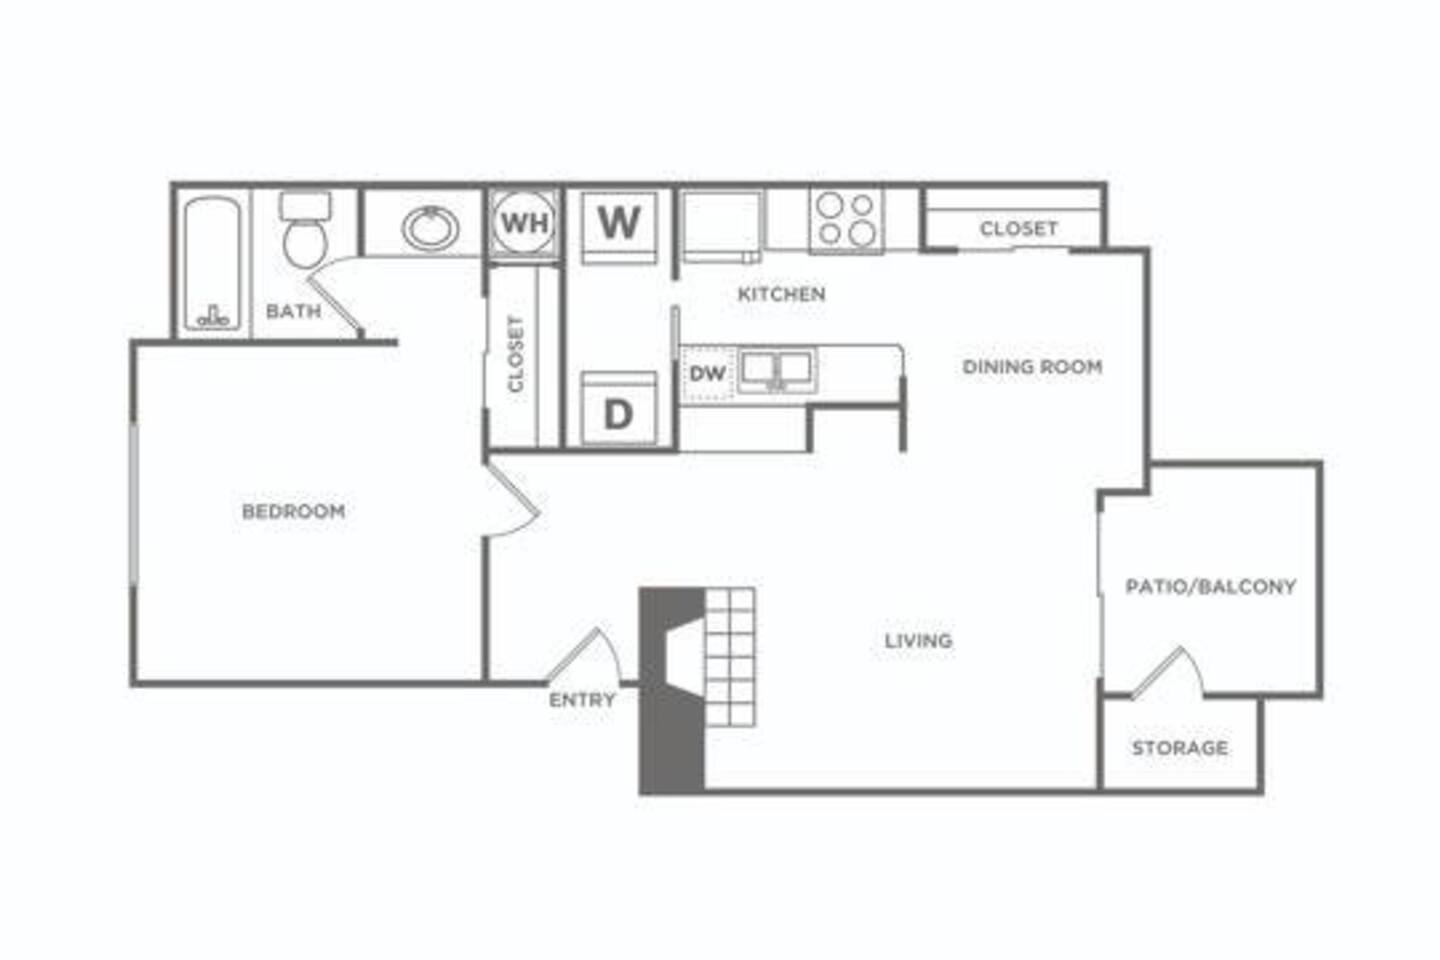 Floorplan diagram for One Bedroom (662 SF) Renovated, showing 1 bedroom